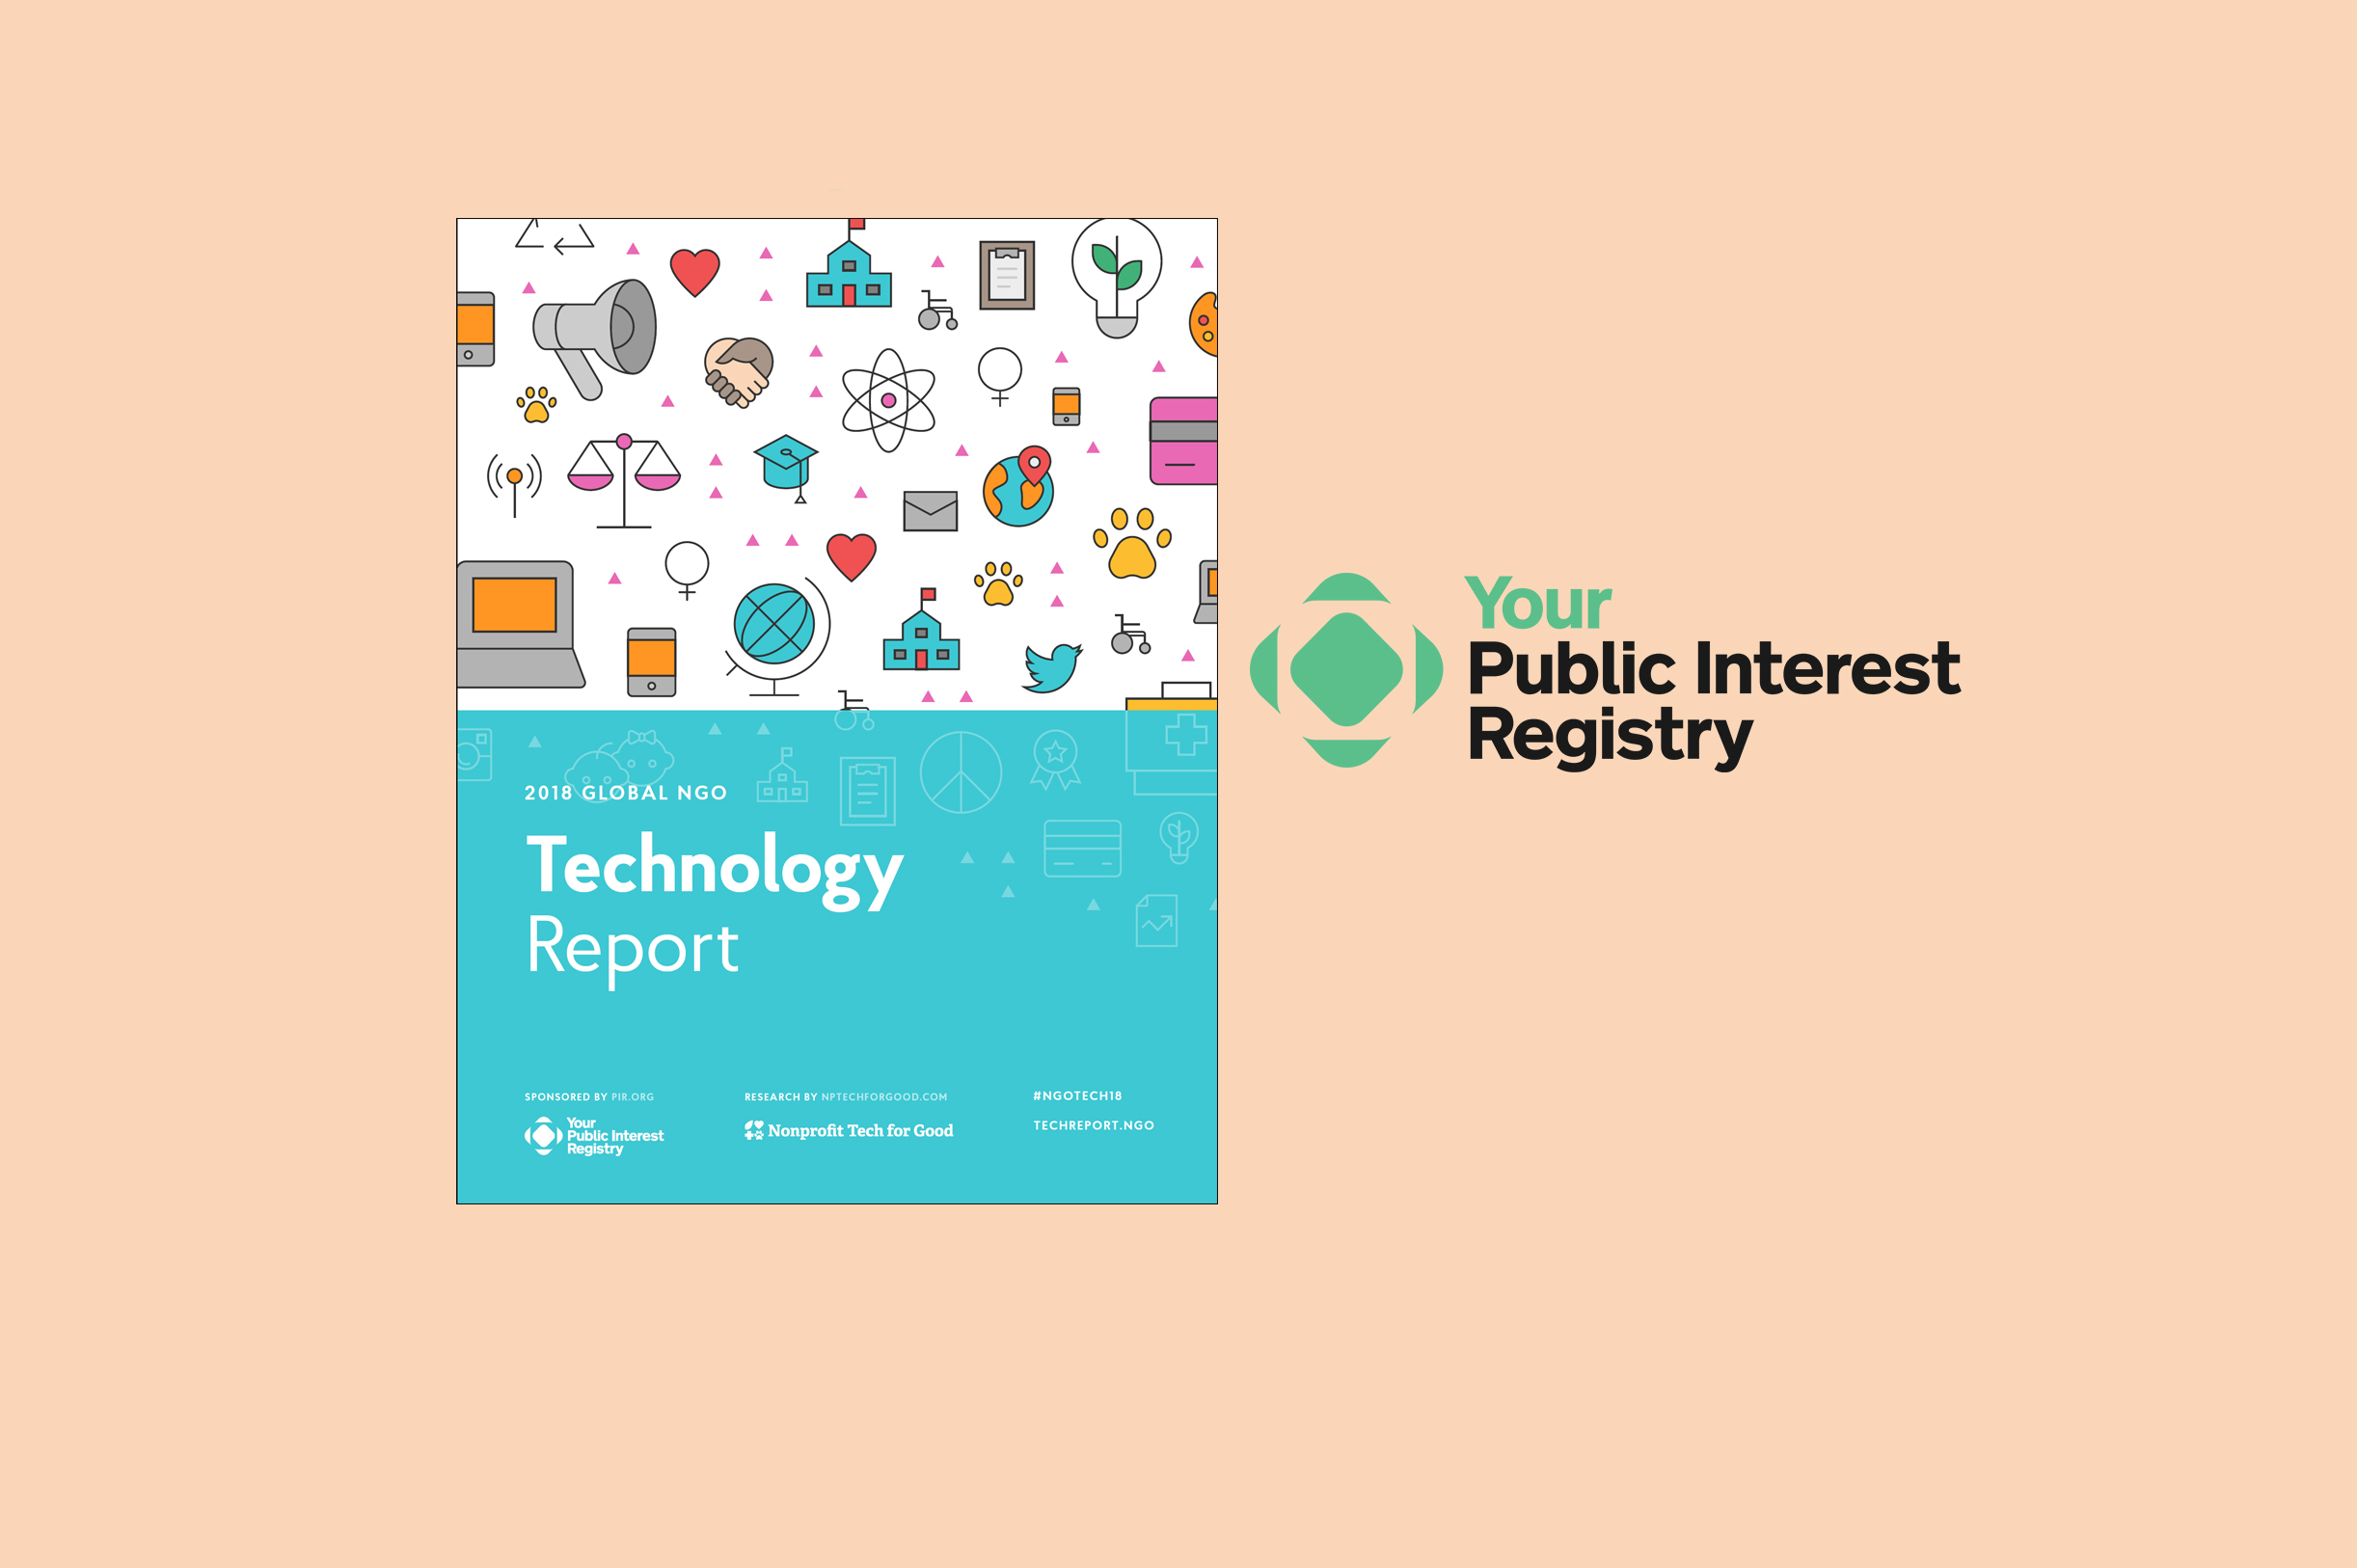 Public Interest Registry With Nonprofit Tech for Good